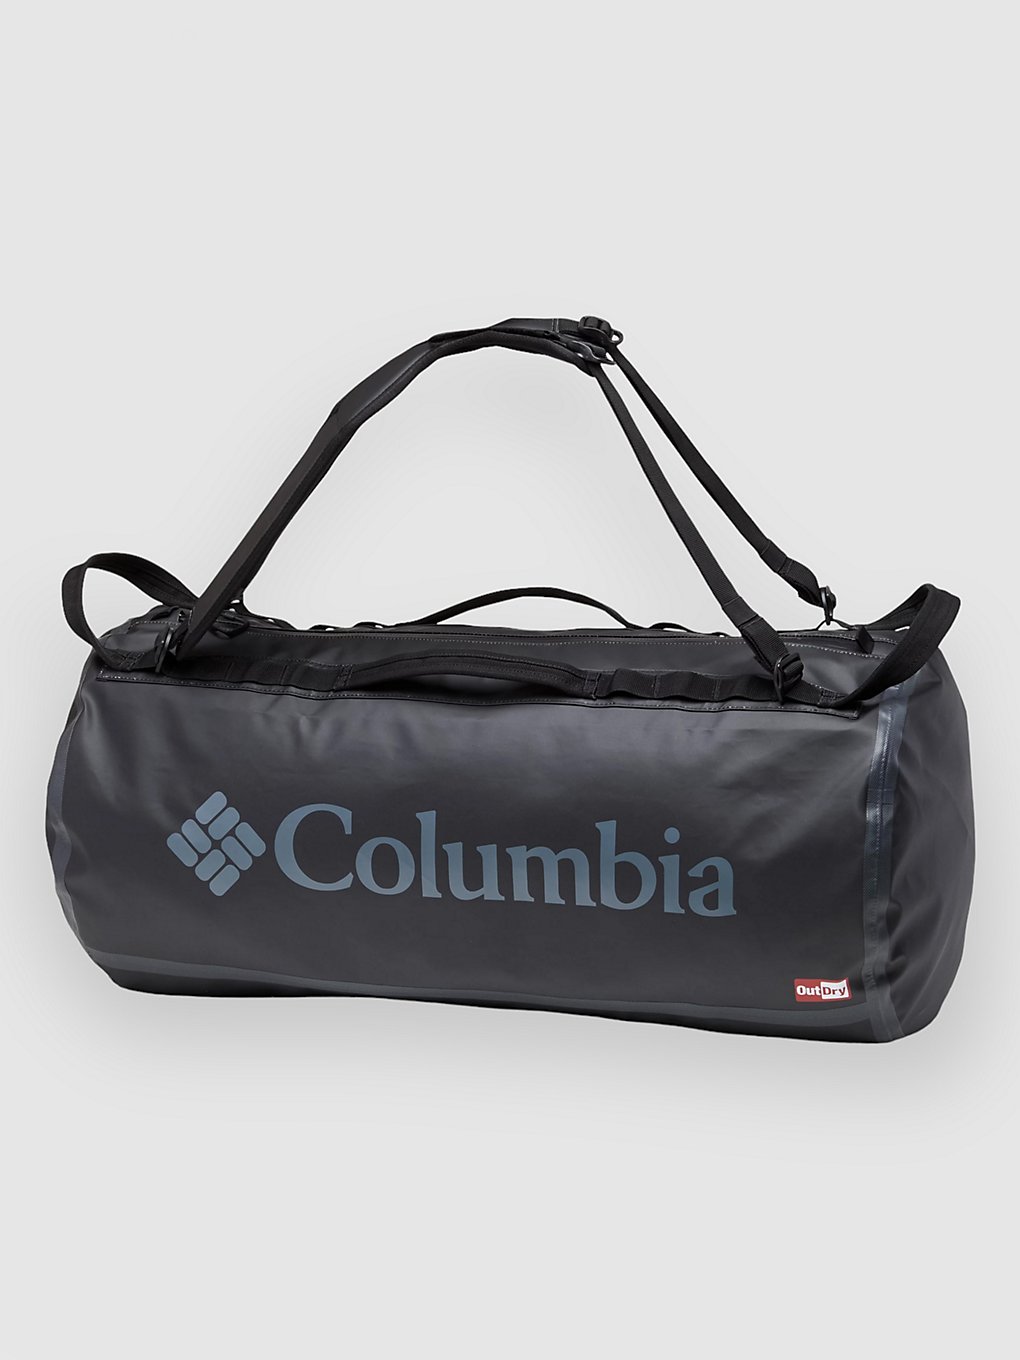 Columbia Out Dry Ex 60L Duffle Reisetasche black kaufen